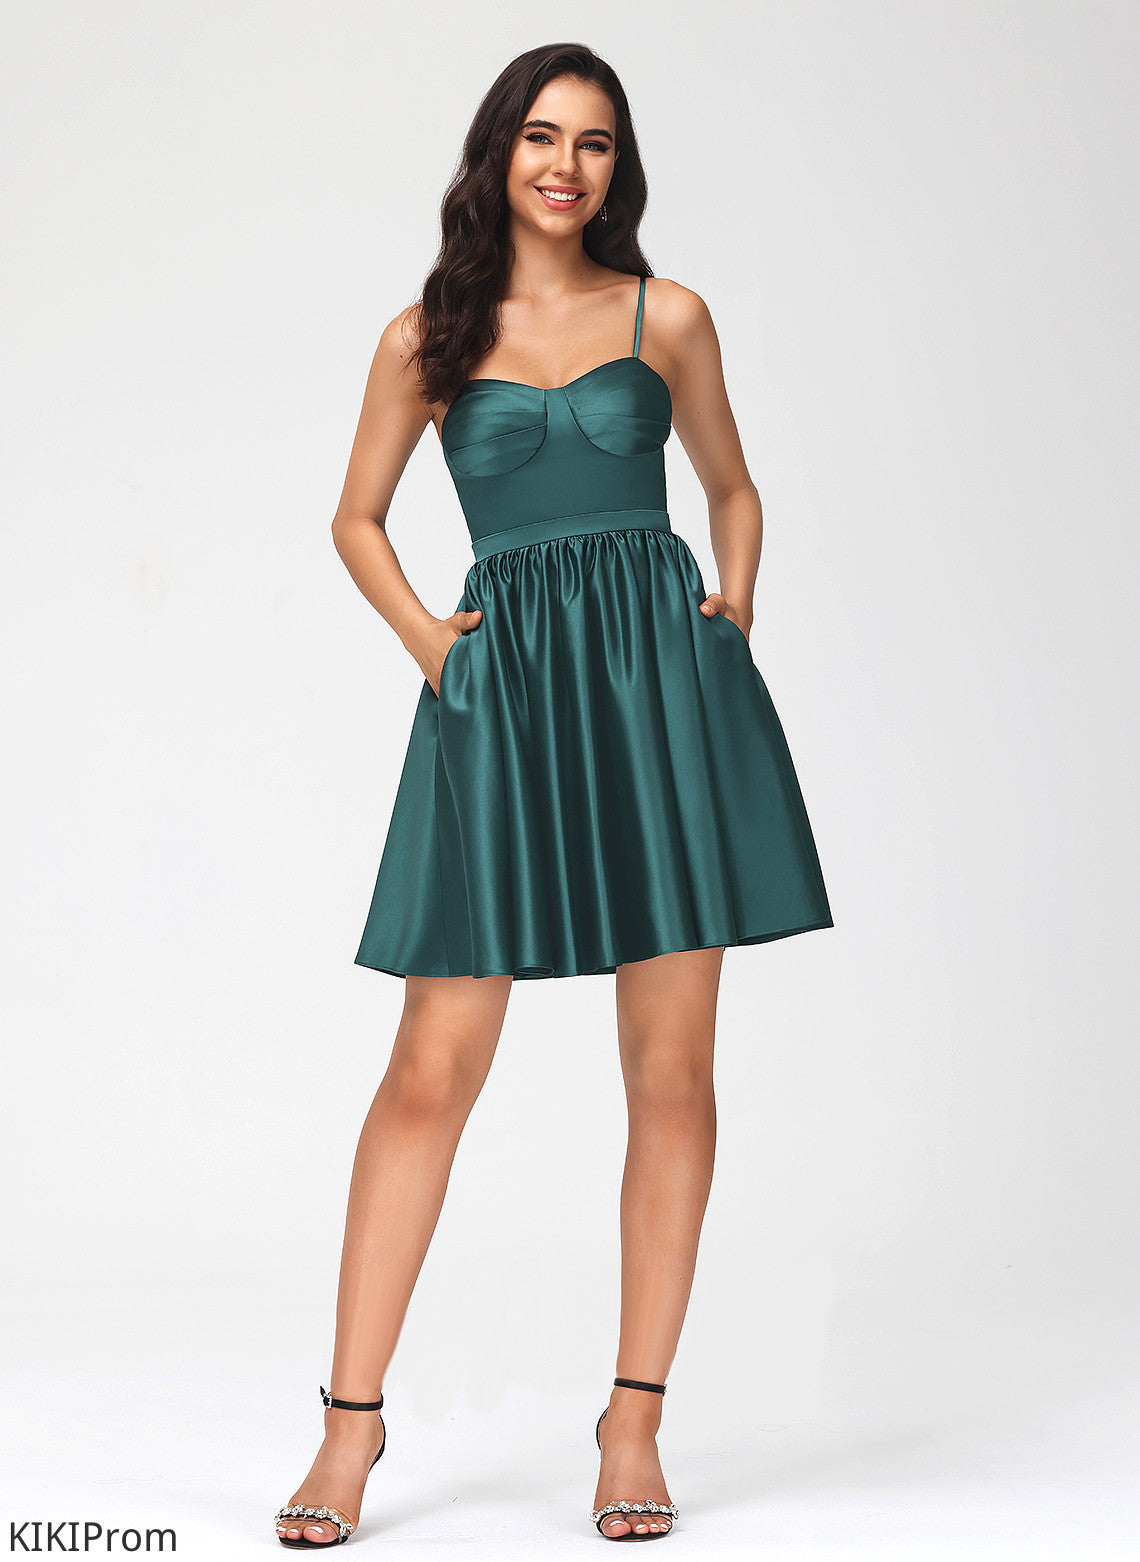 Satin Pockets Short/Mini Homecoming Dresses A-Line Jazlynn Sweetheart With Dress Homecoming